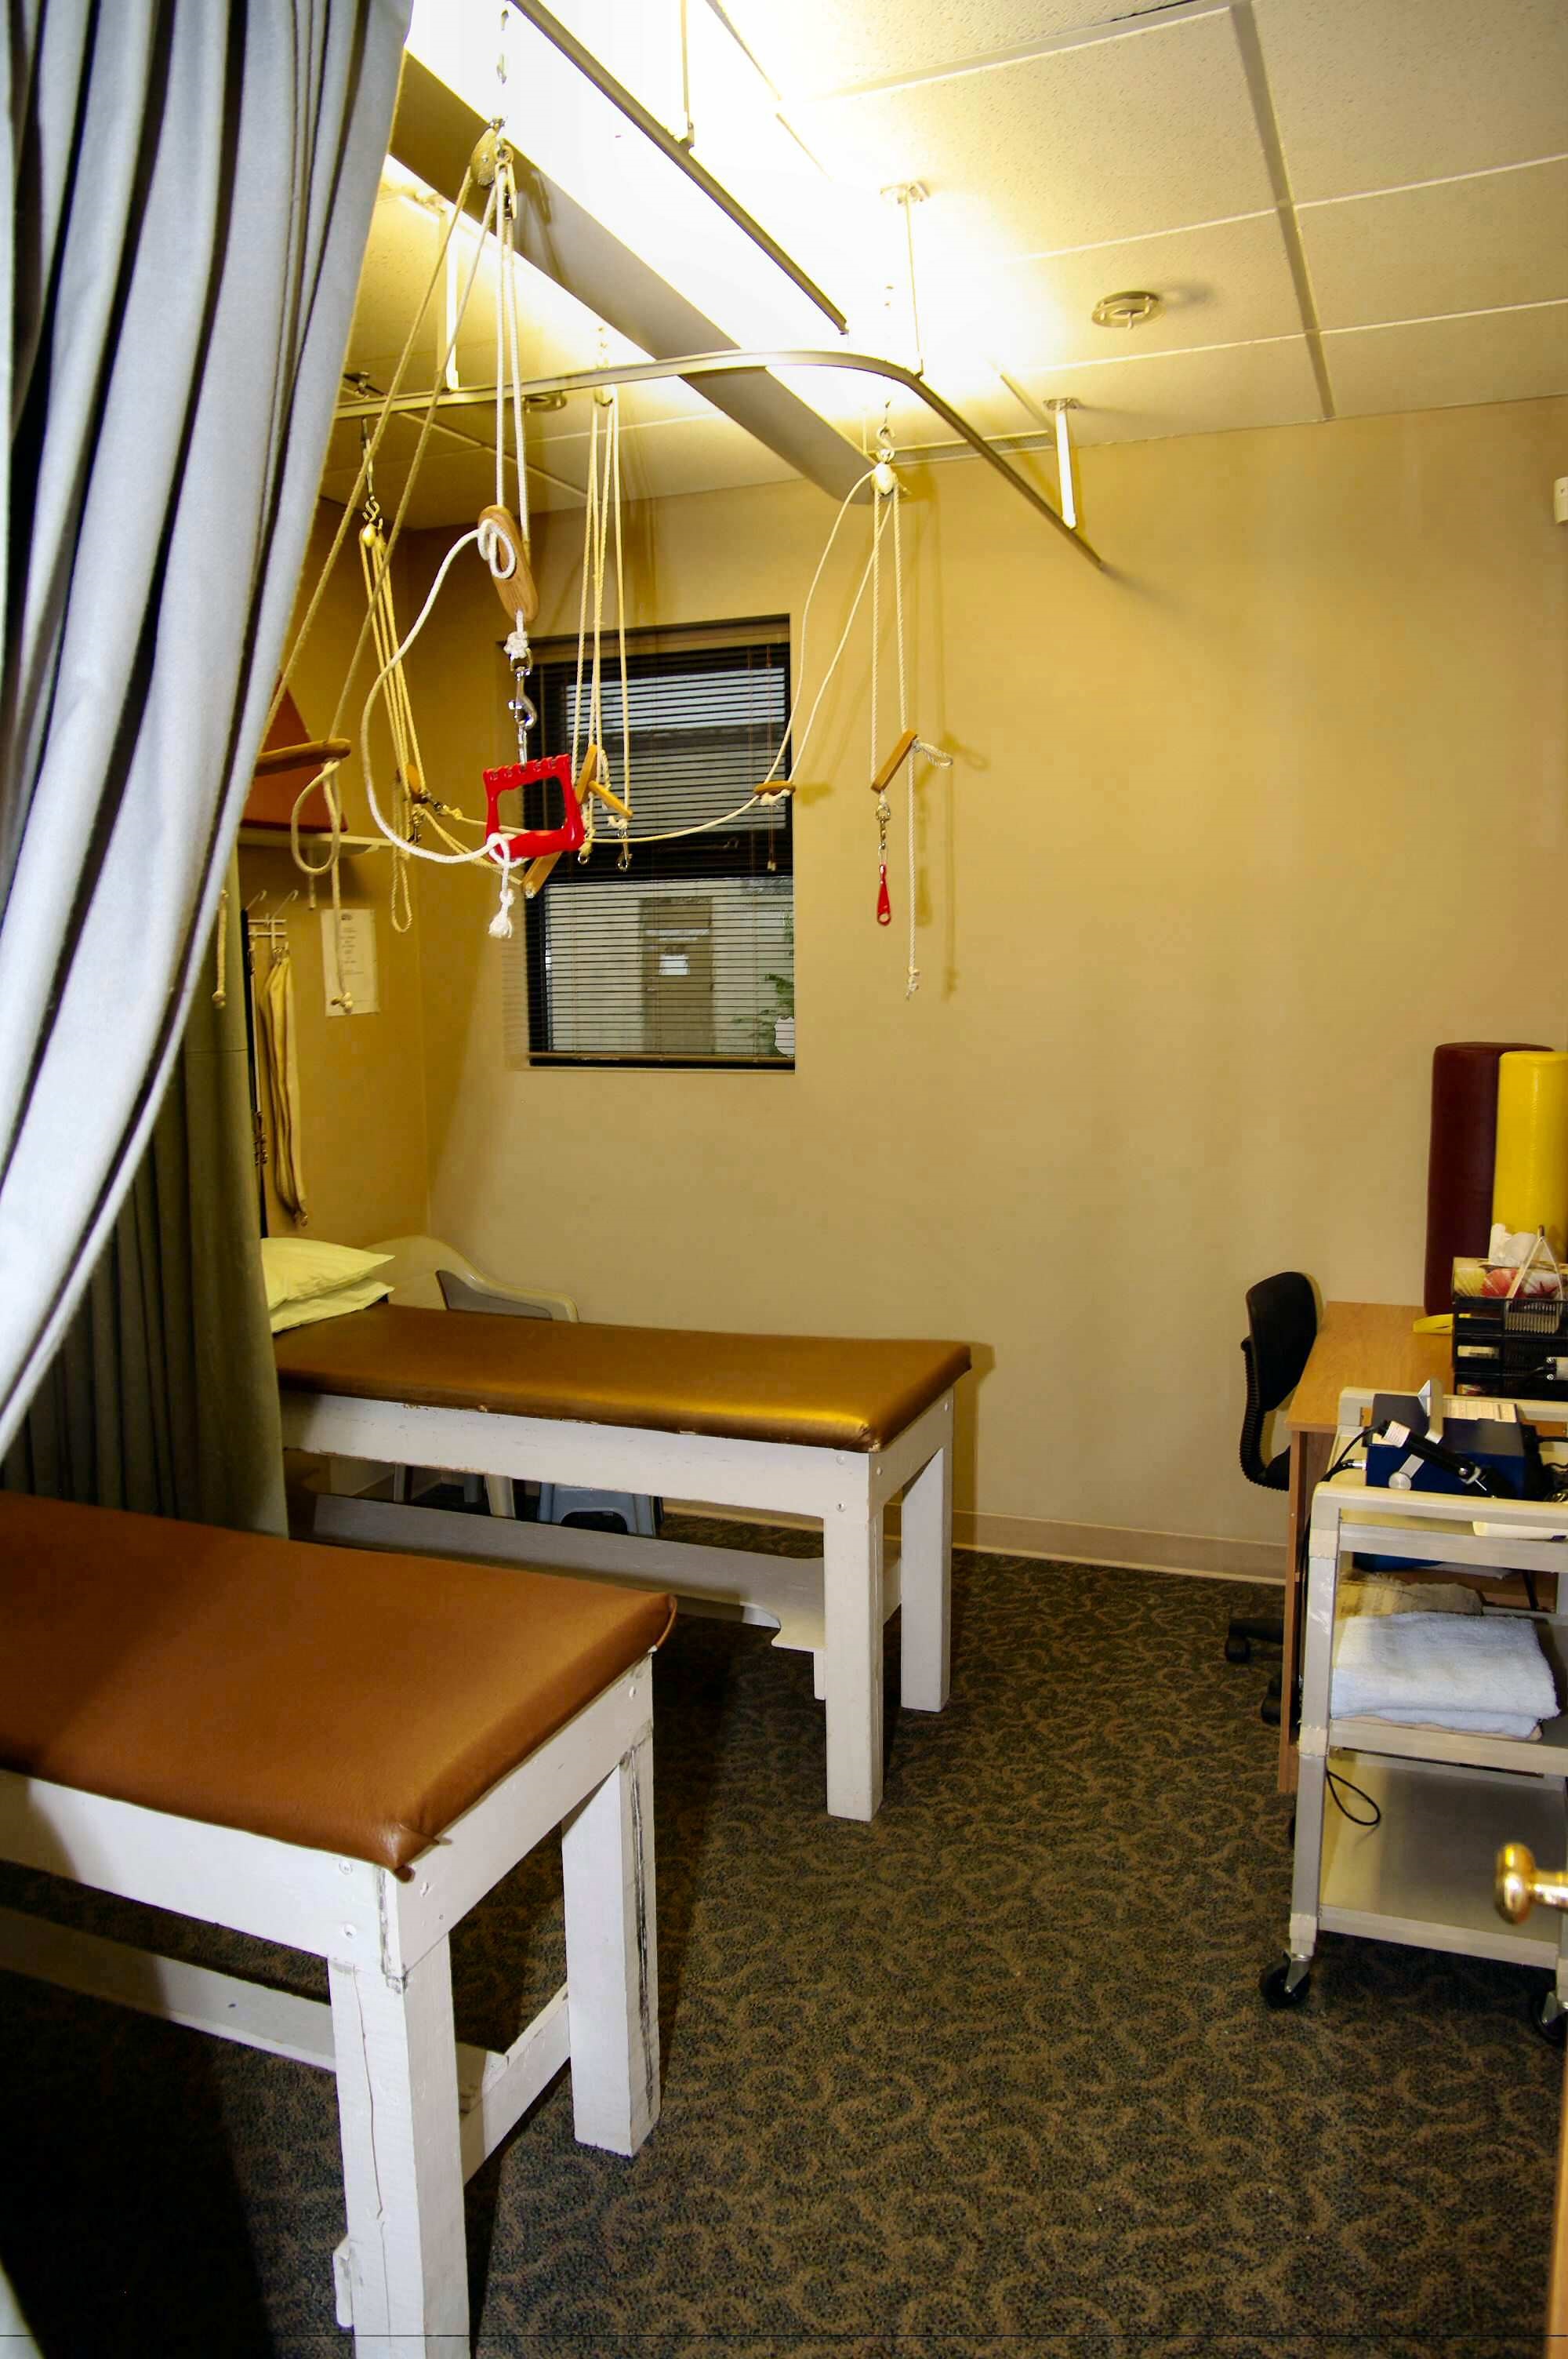 A St. James Rehab treatment room.